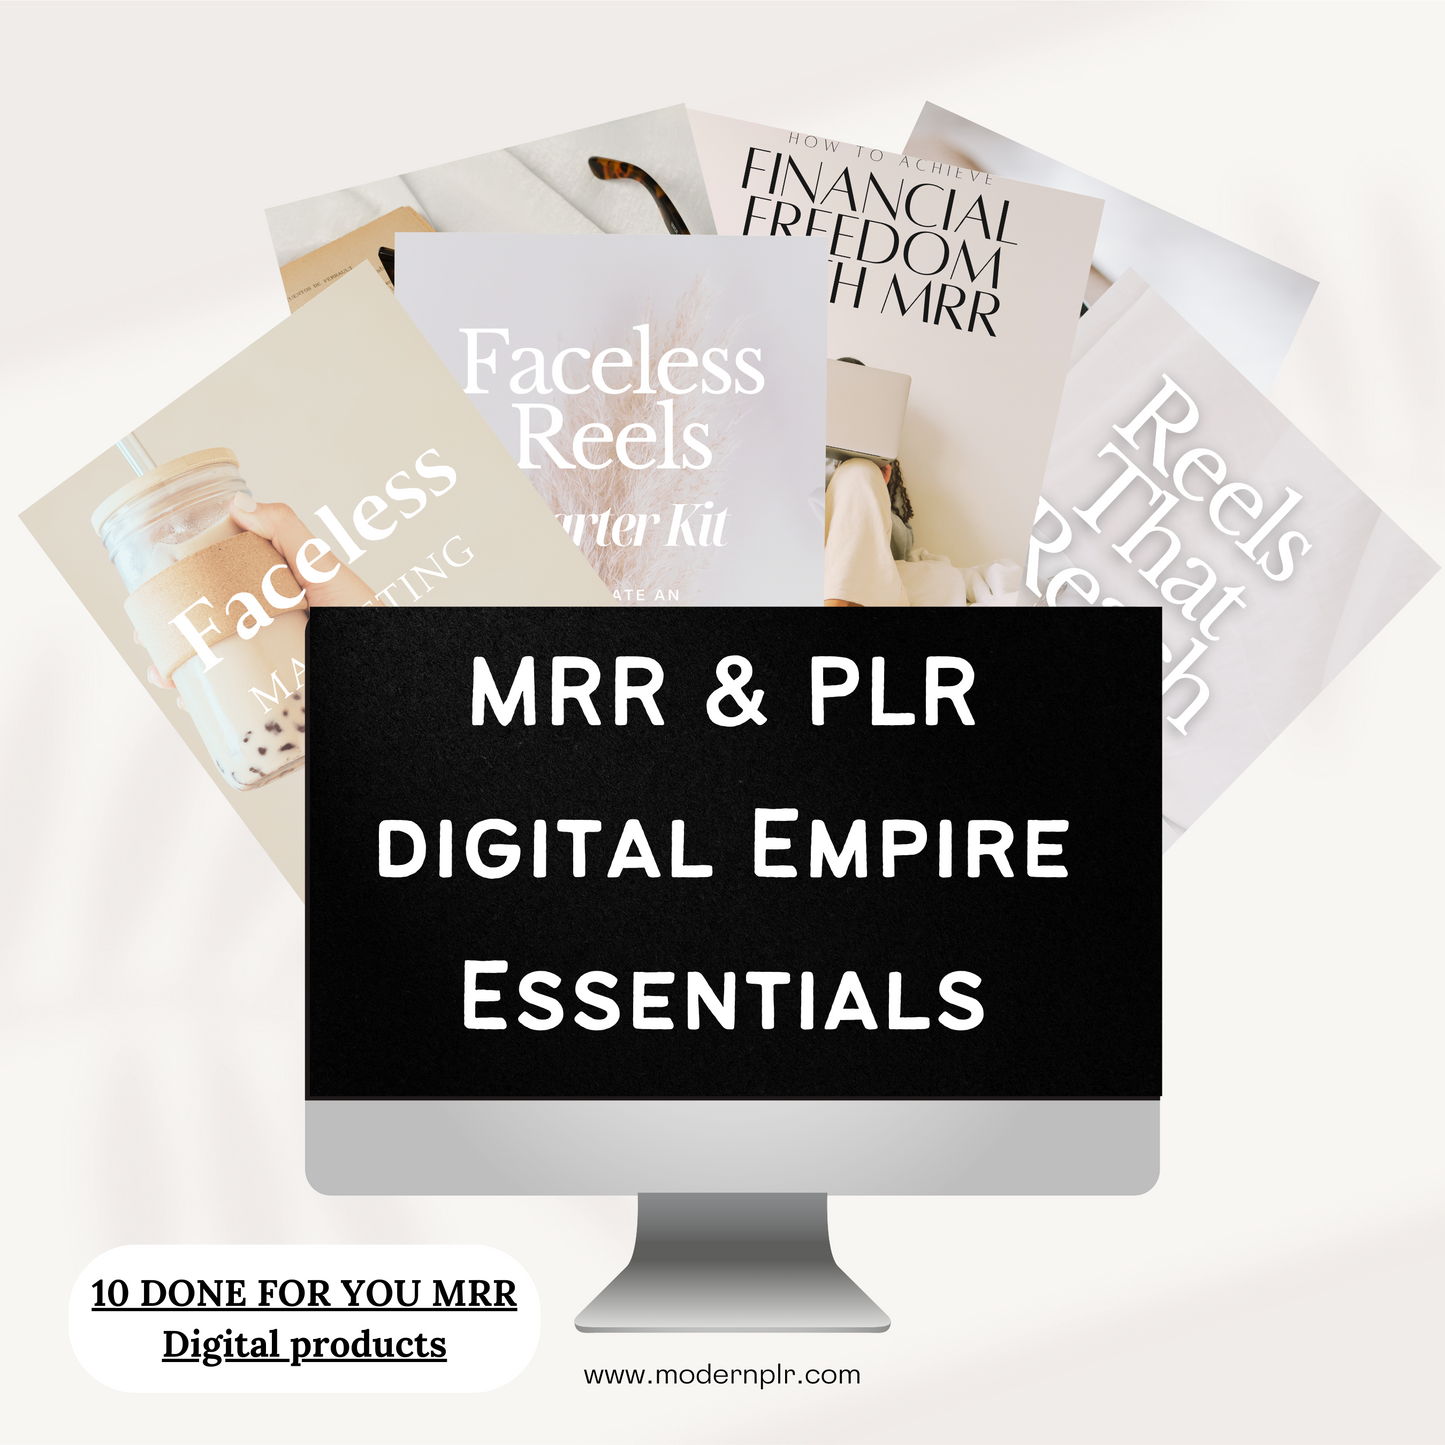 The MRR & PLR Digital Empire Essentials Bundle